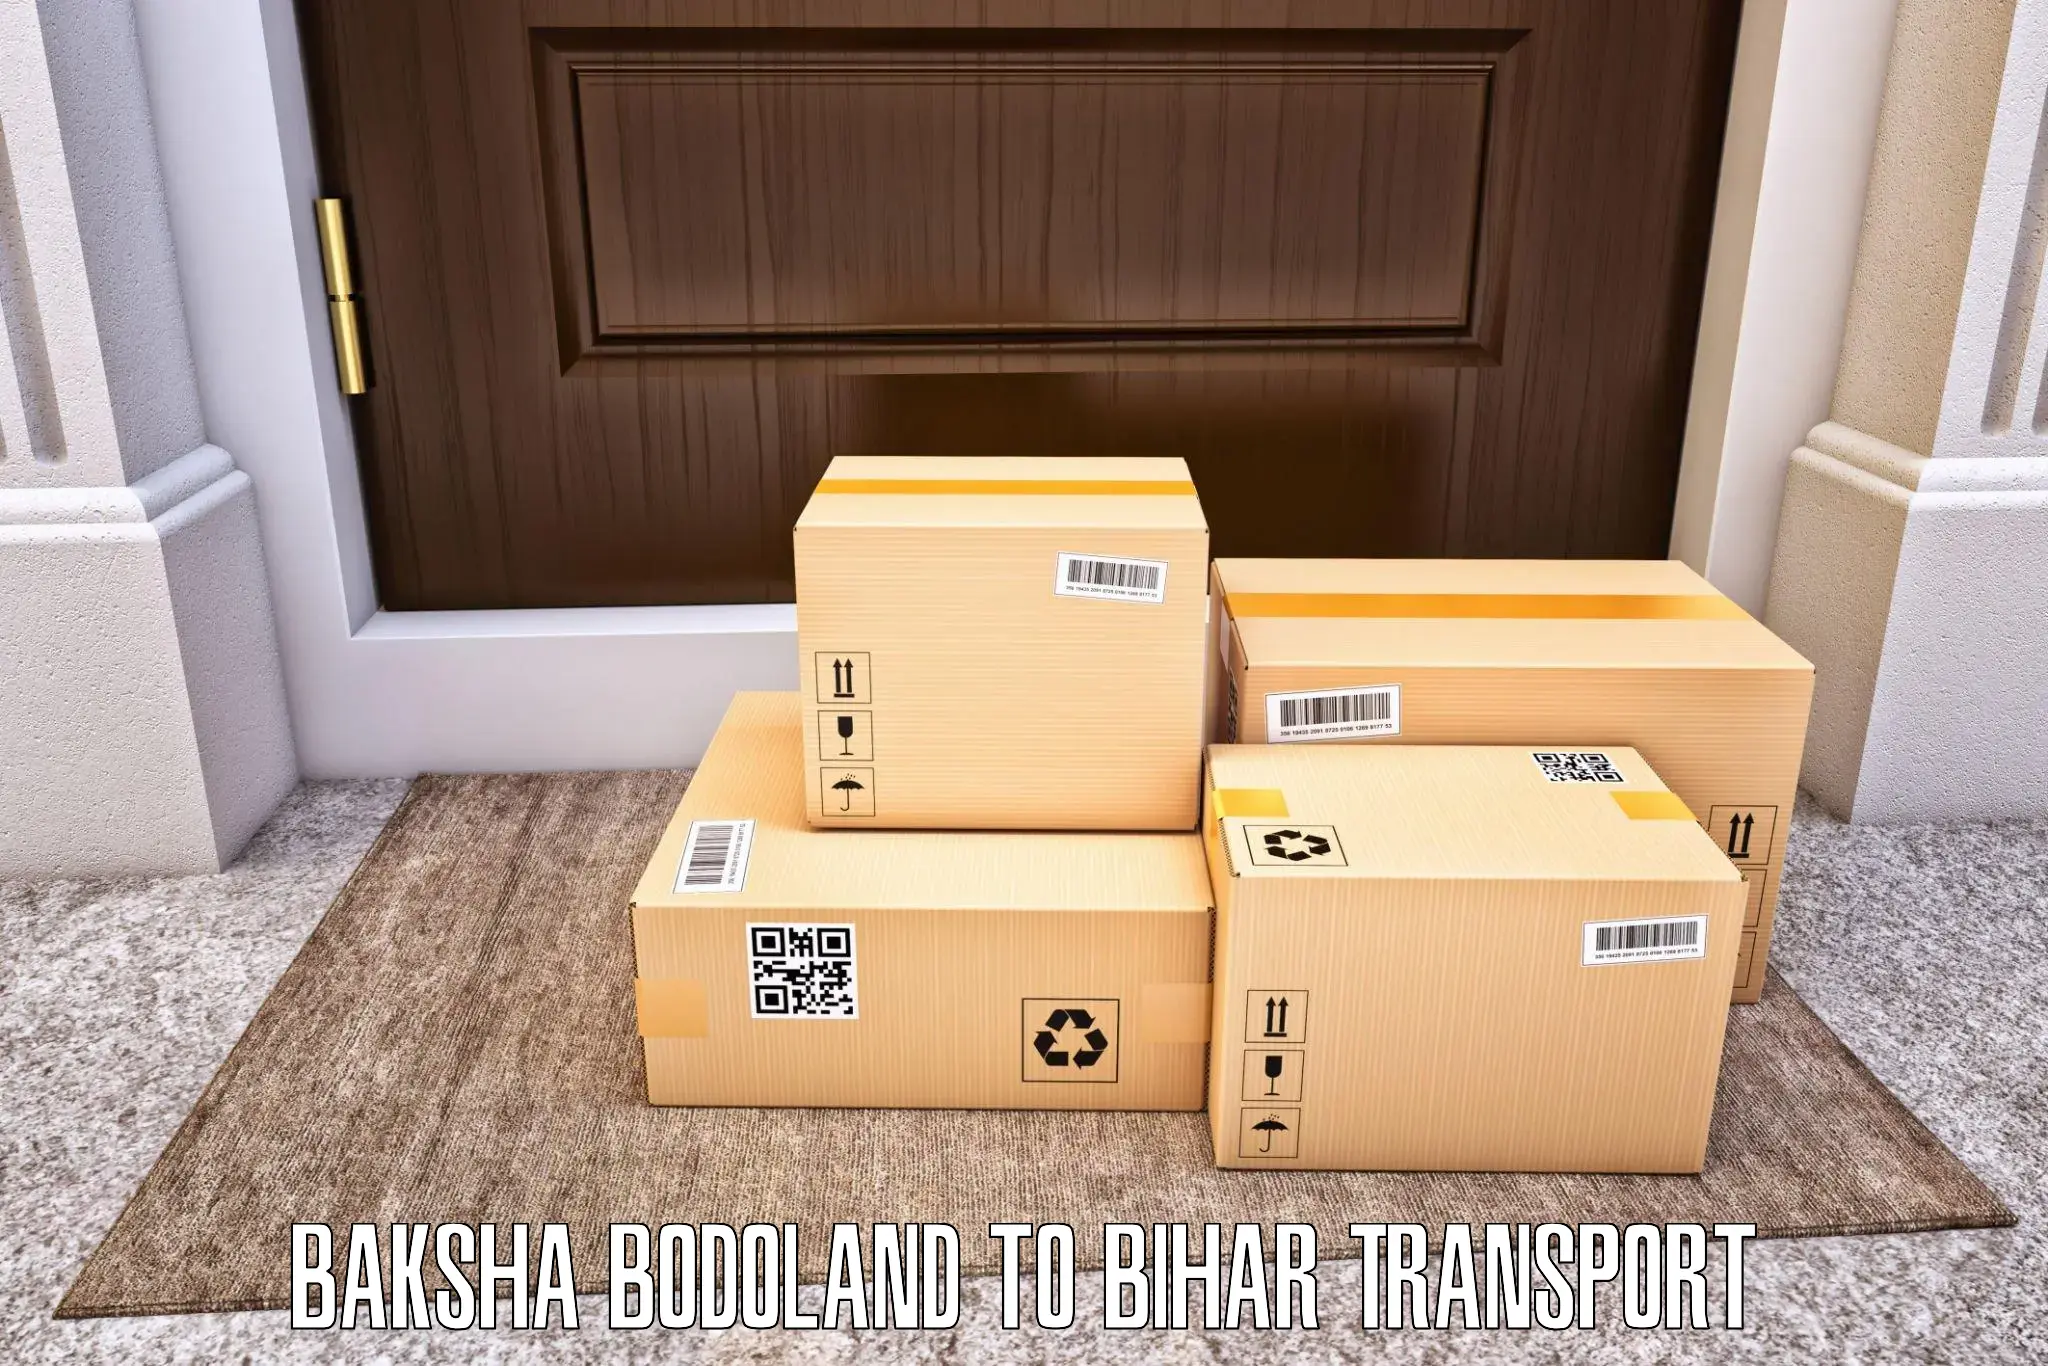 Transport in sharing in Baksha Bodoland to Biraul